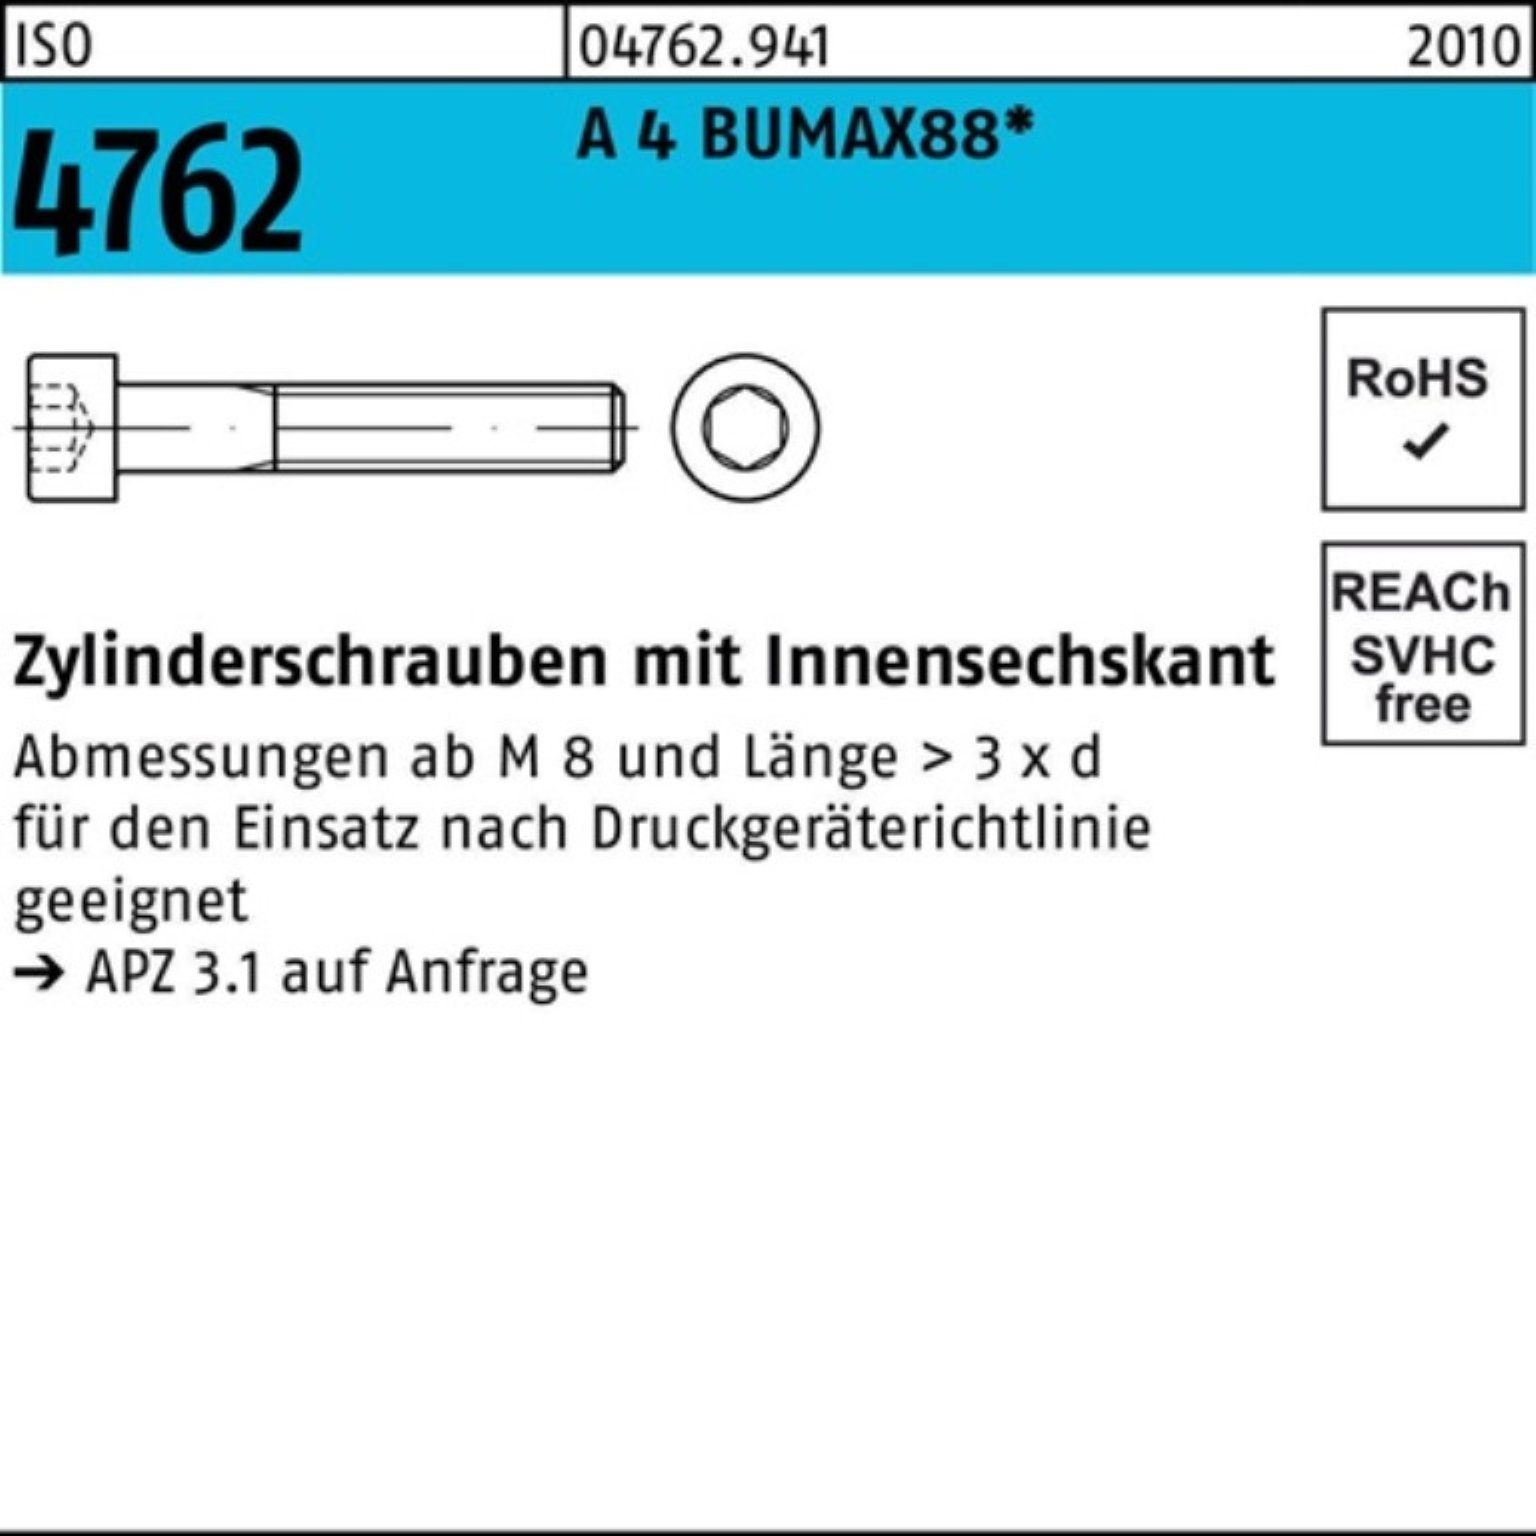 Bufab Zylinderschraube 200er Pack Zylinderschraube ISO 4762 Innen-6kt M4x 30 A 4 BUMAX88 200